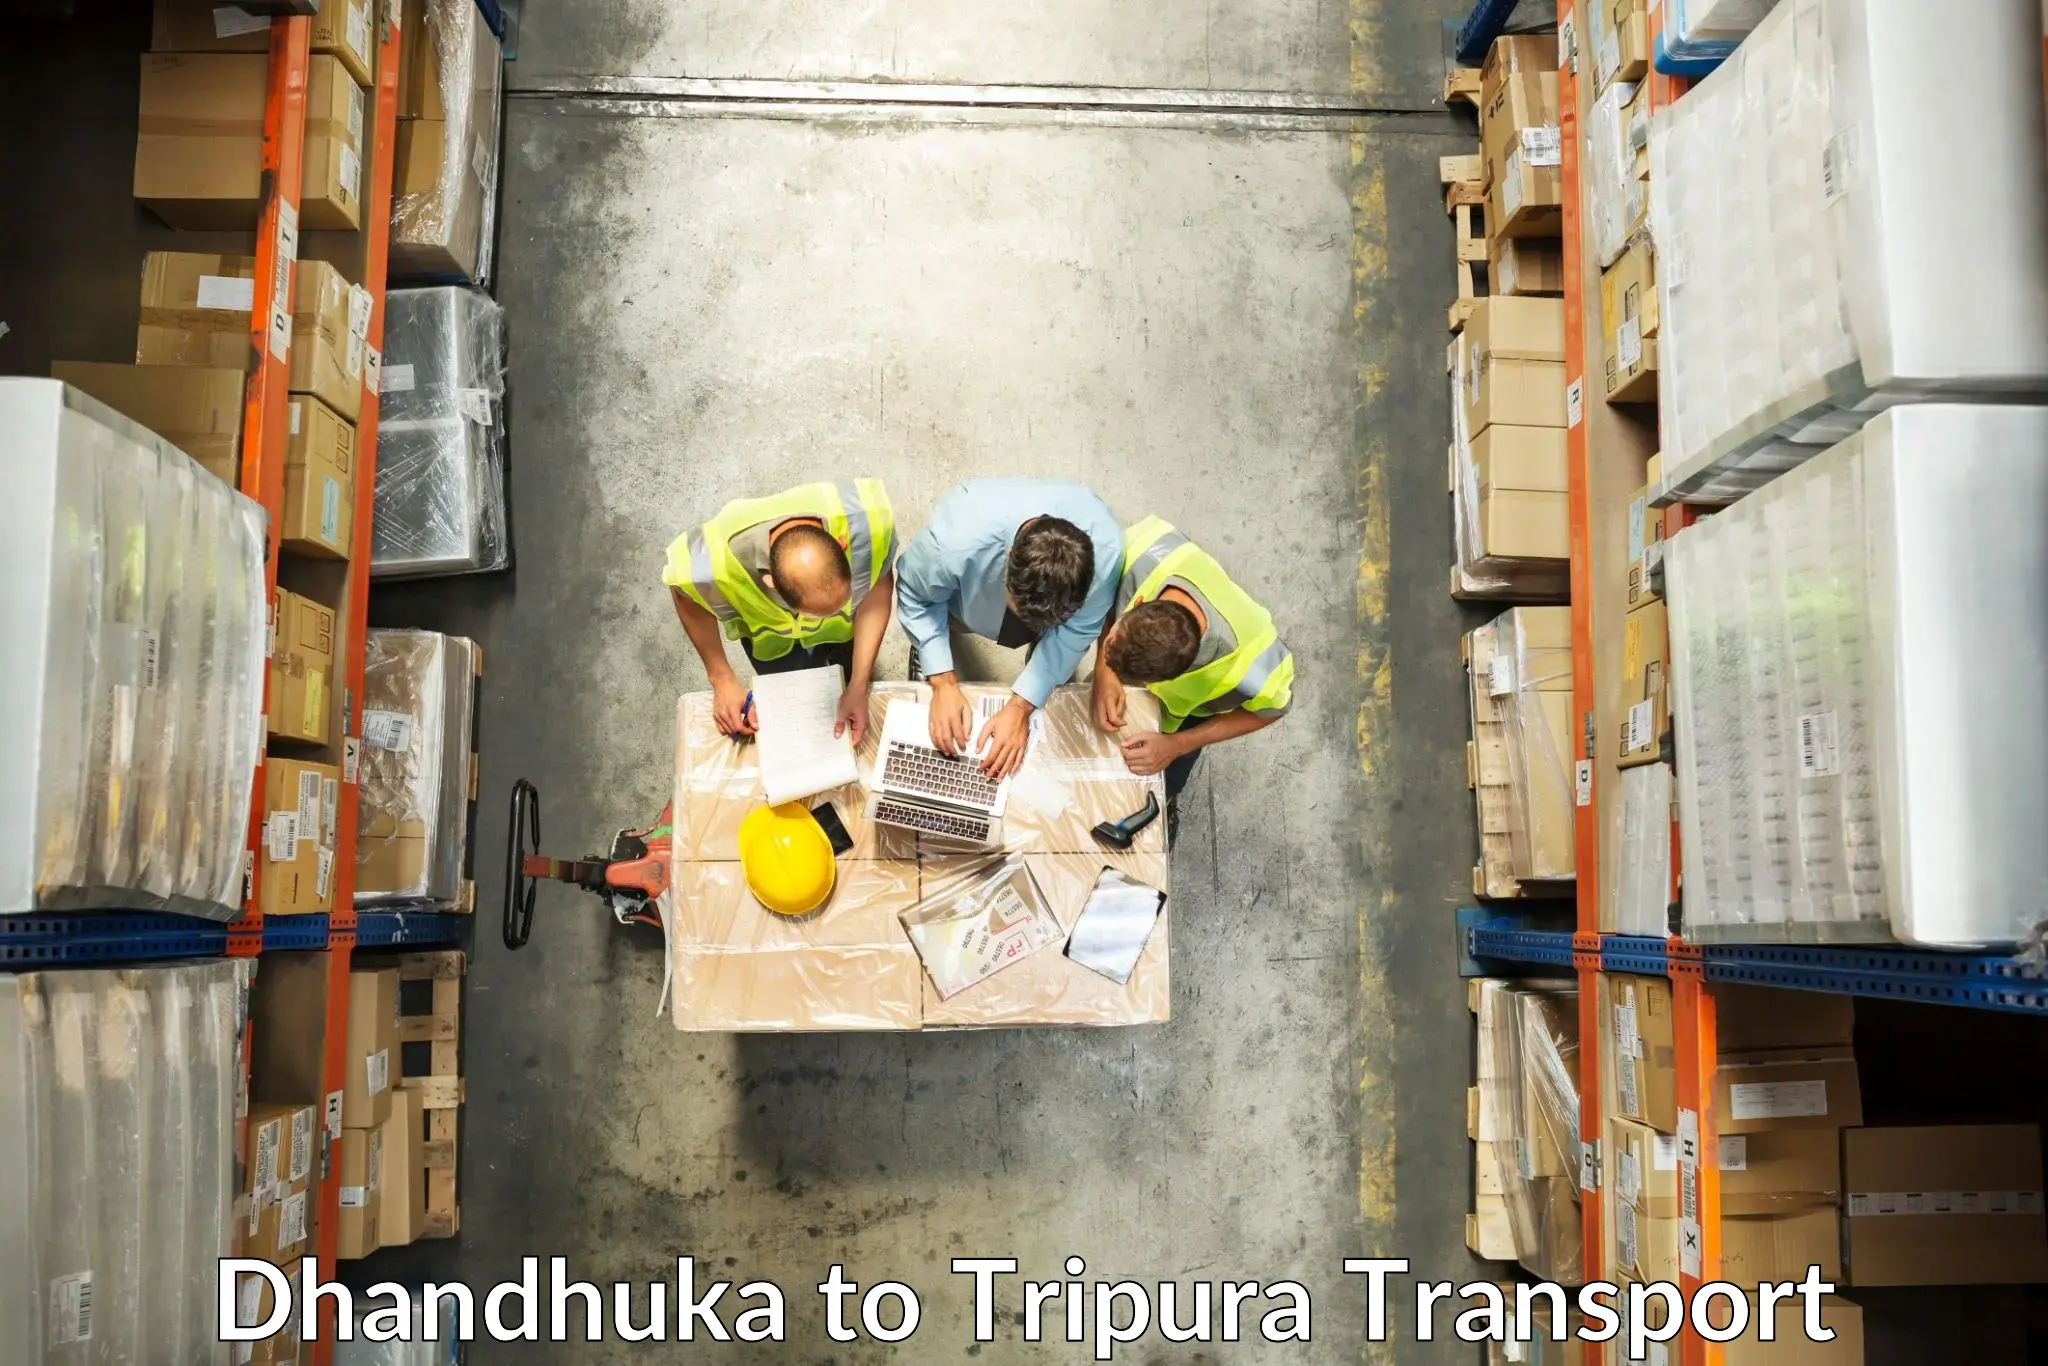 Cycle transportation service Dhandhuka to Udaipur Tripura